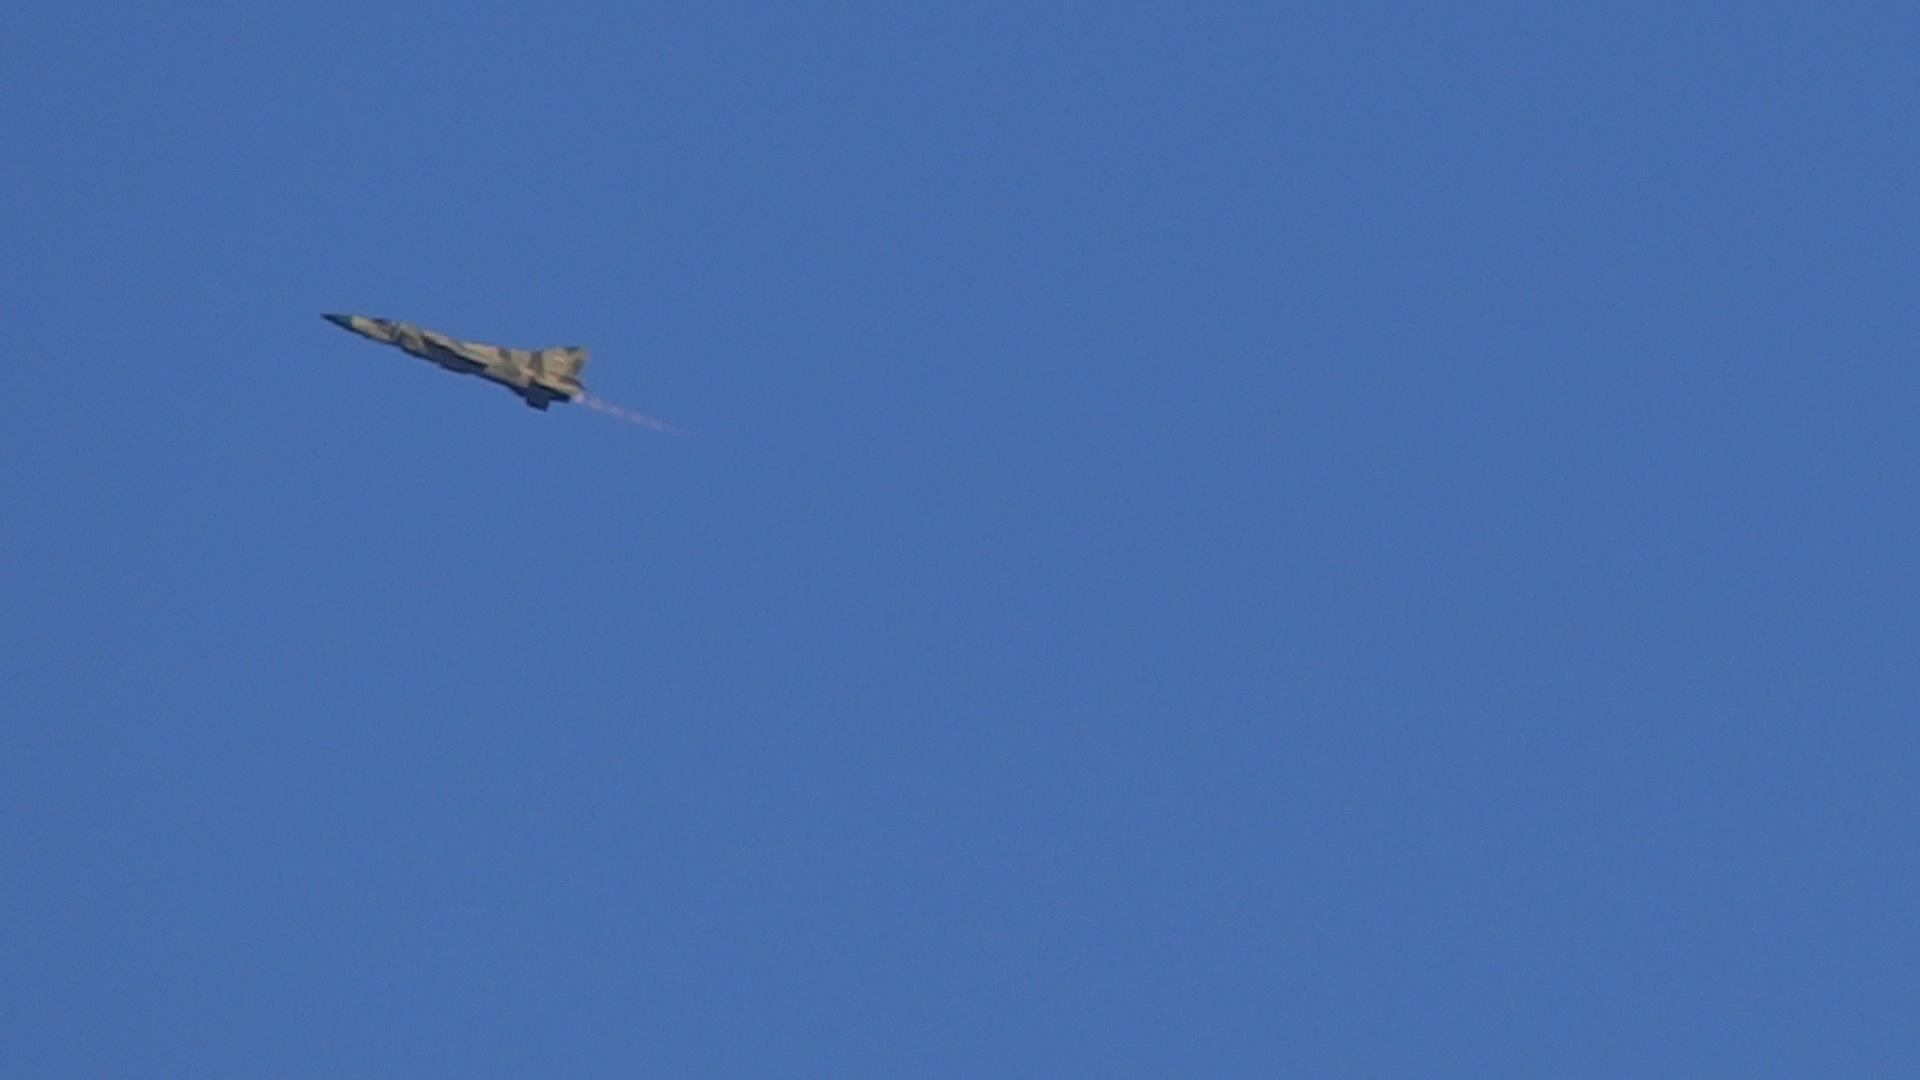 http://theaviationist.com/wp-content/uploads/2013/12/SyAAF-MiG-23MF-Idleb-Kafrunbel-2013-12-21.jpg